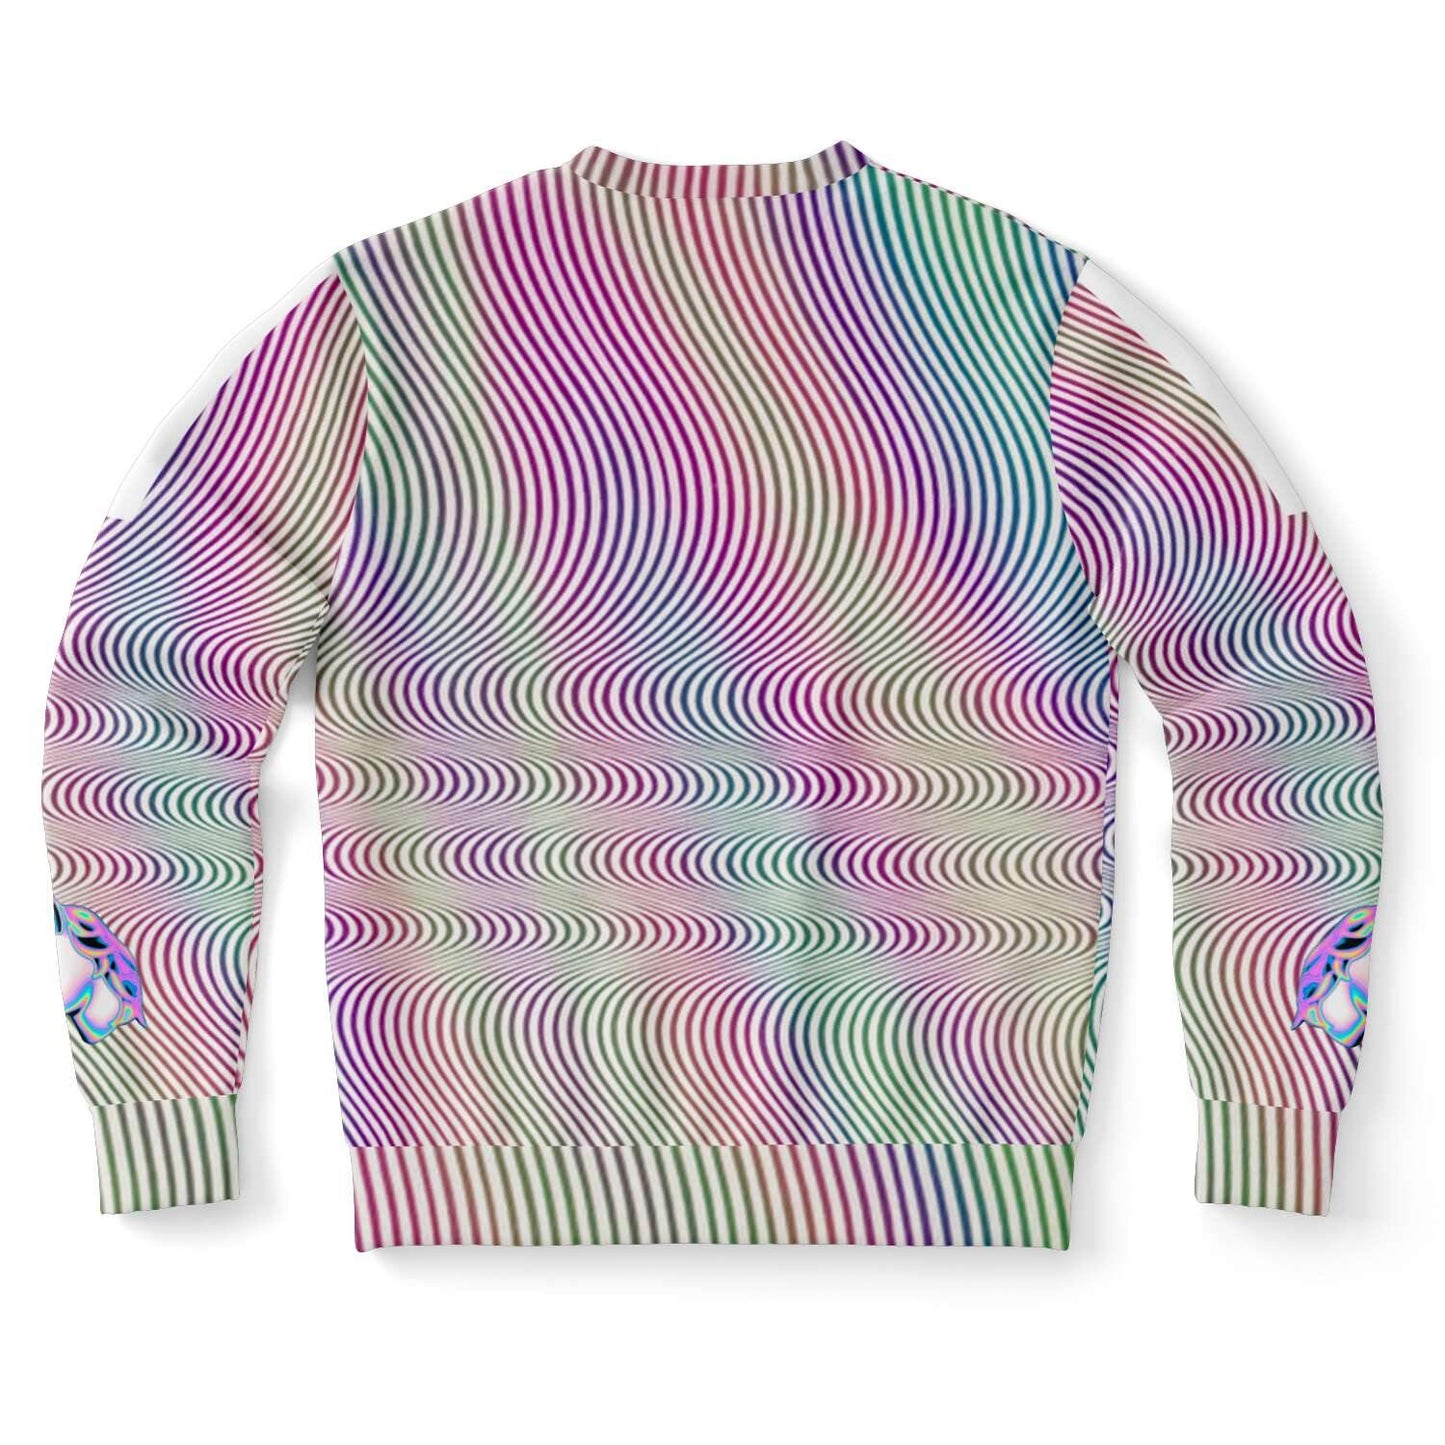 Unicorn Holographic Sweatshirt - OnlyClout